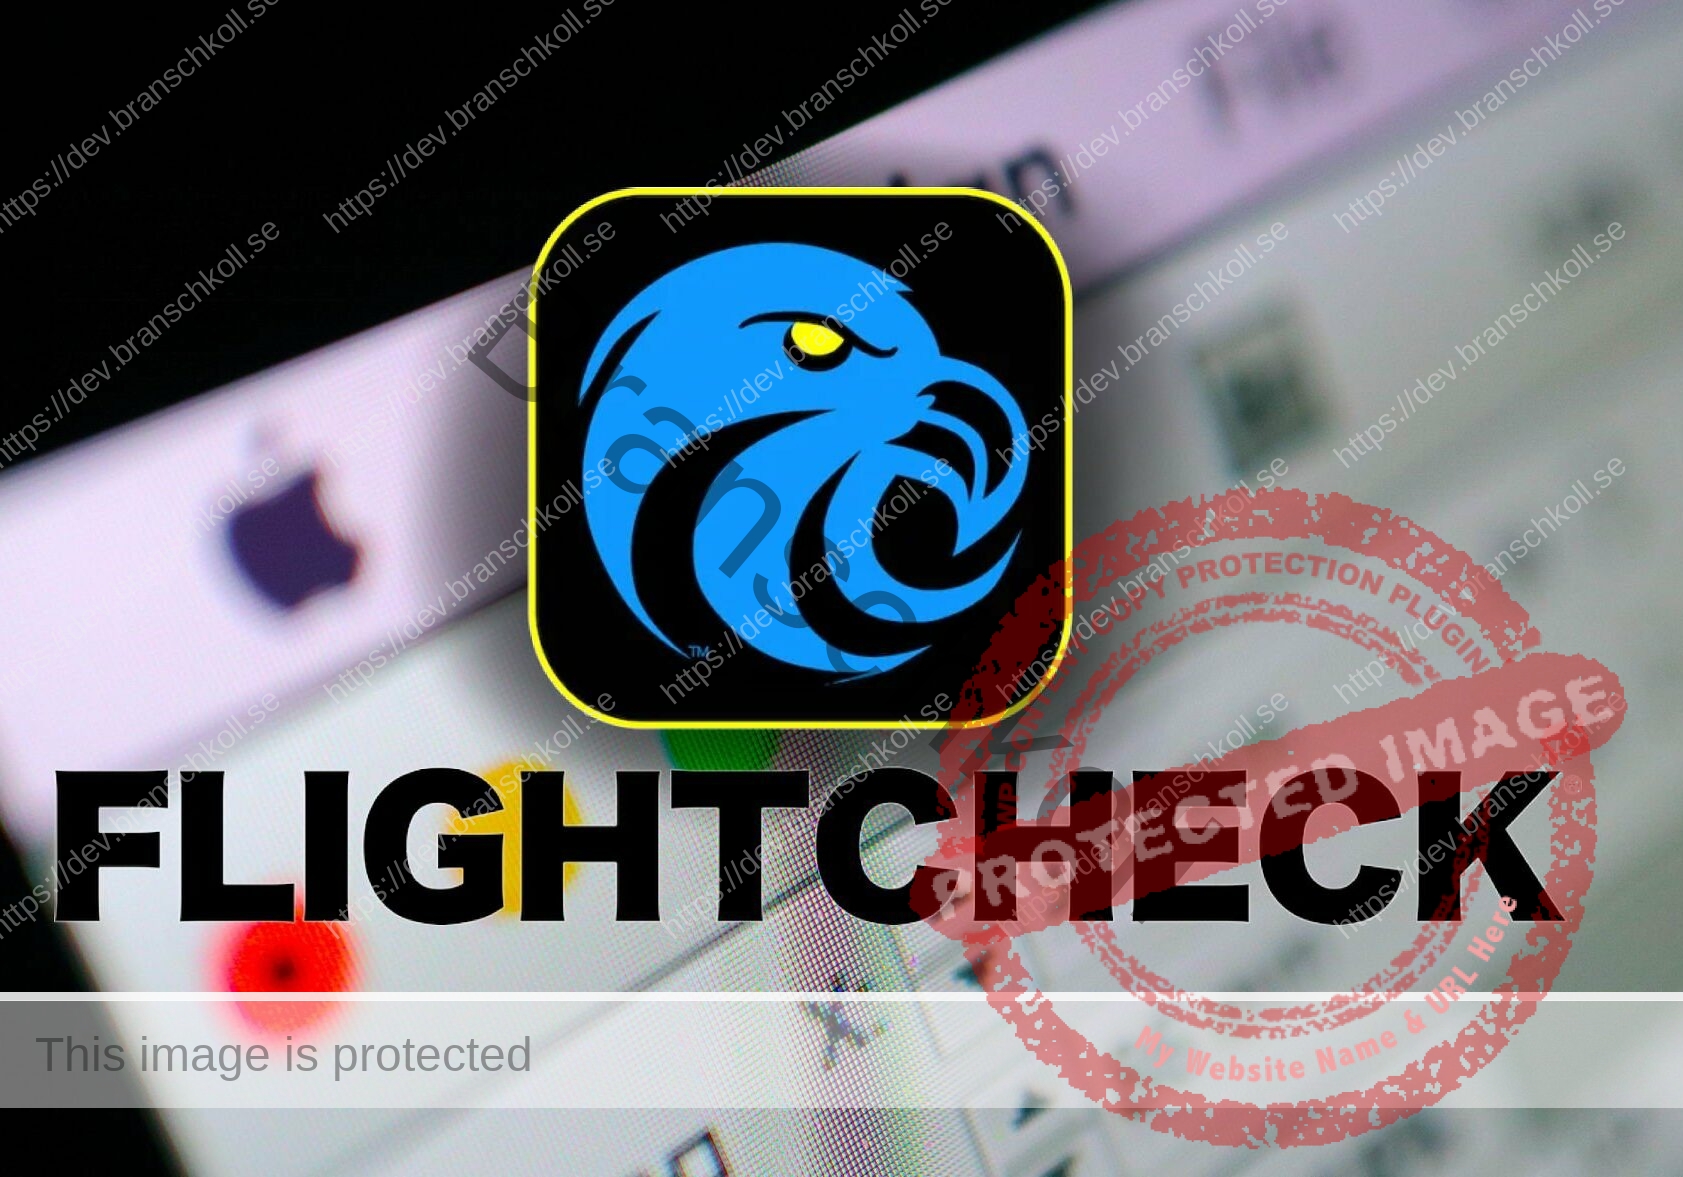 Flightchech_Markzware_preflight